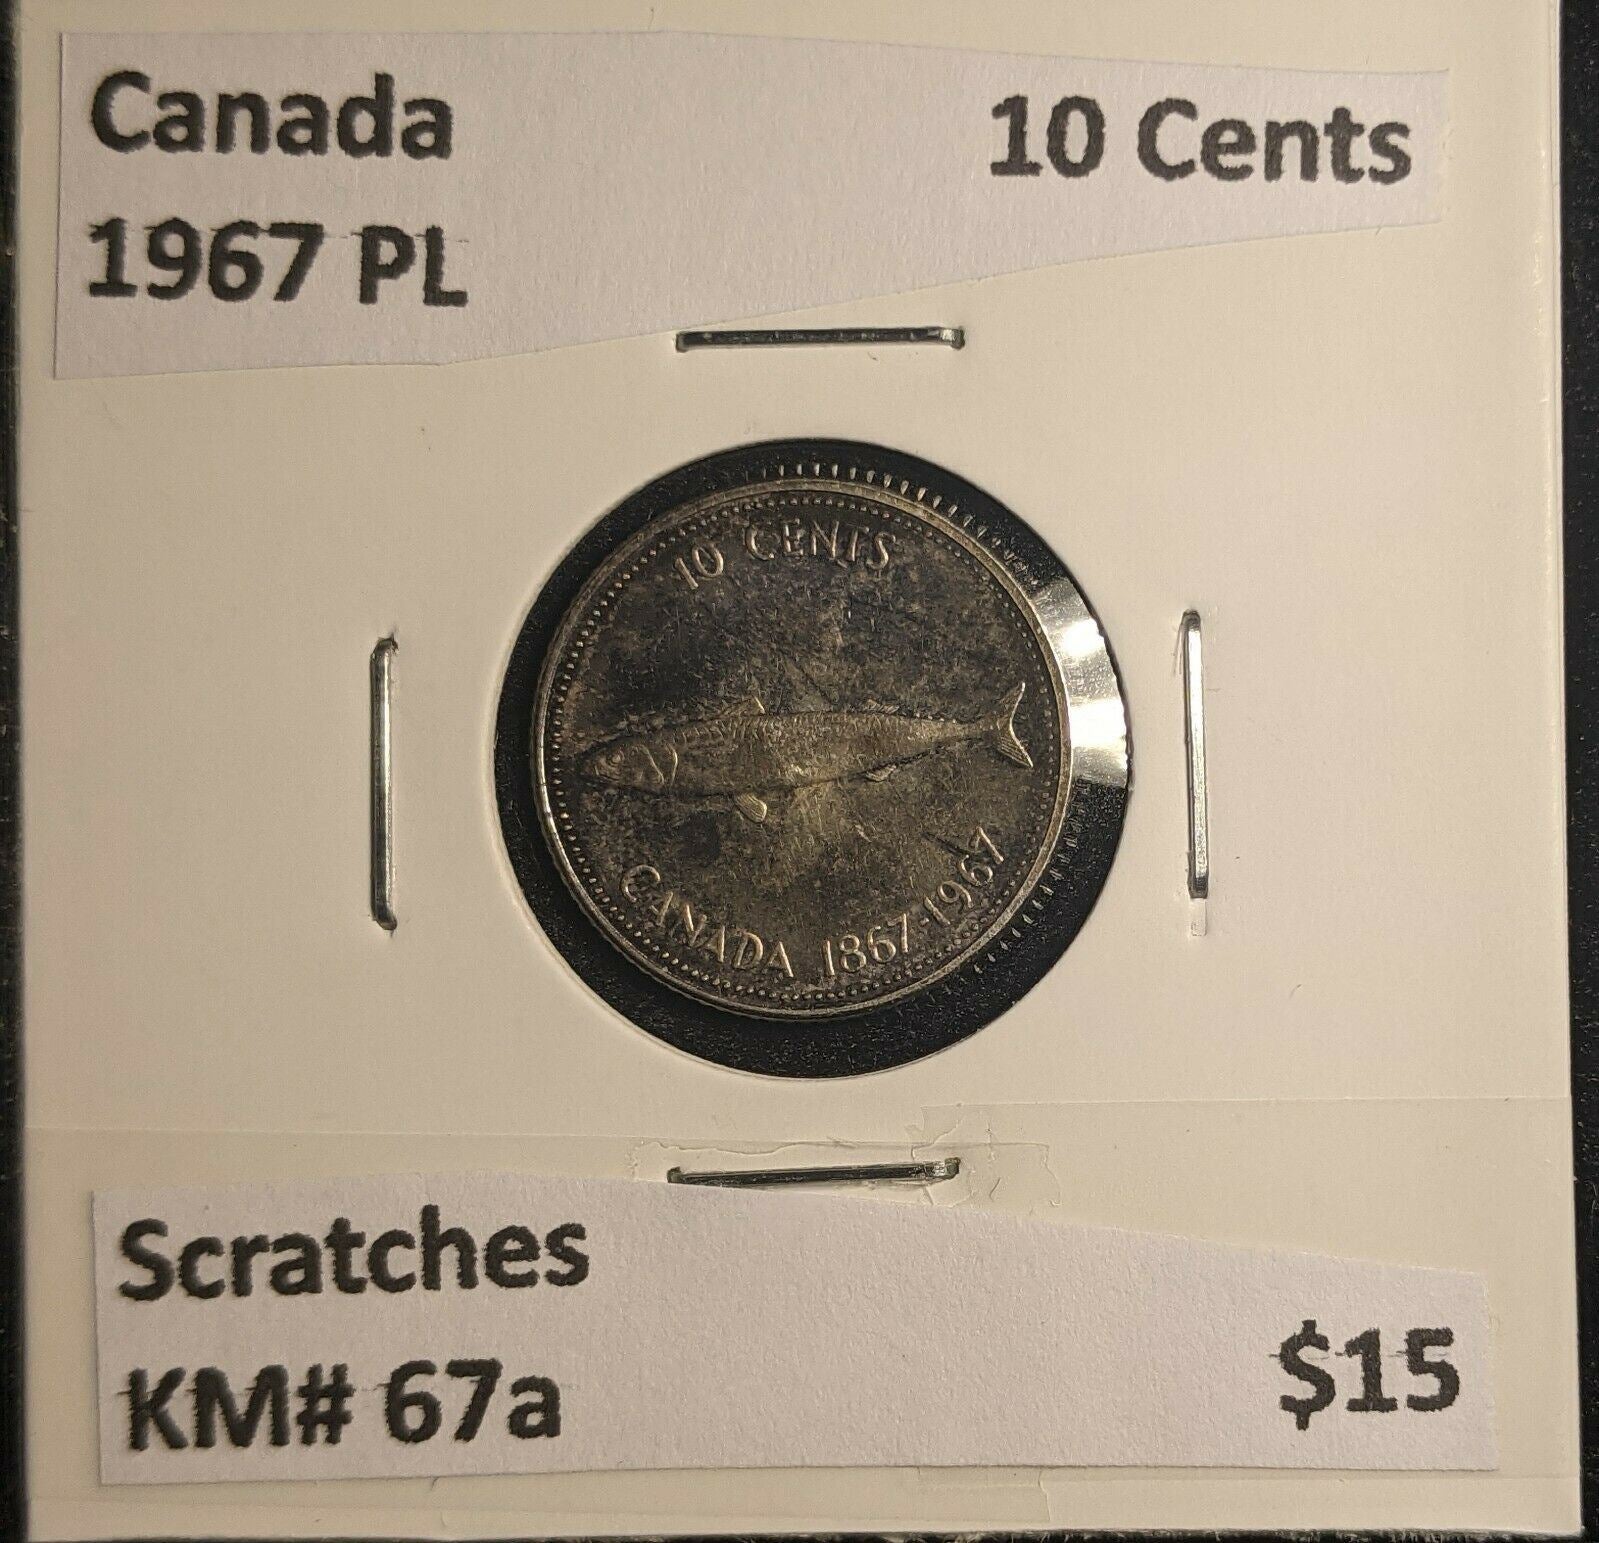 Canada 1967 PL 10 Cents KM# 67a Scratches #459 5B